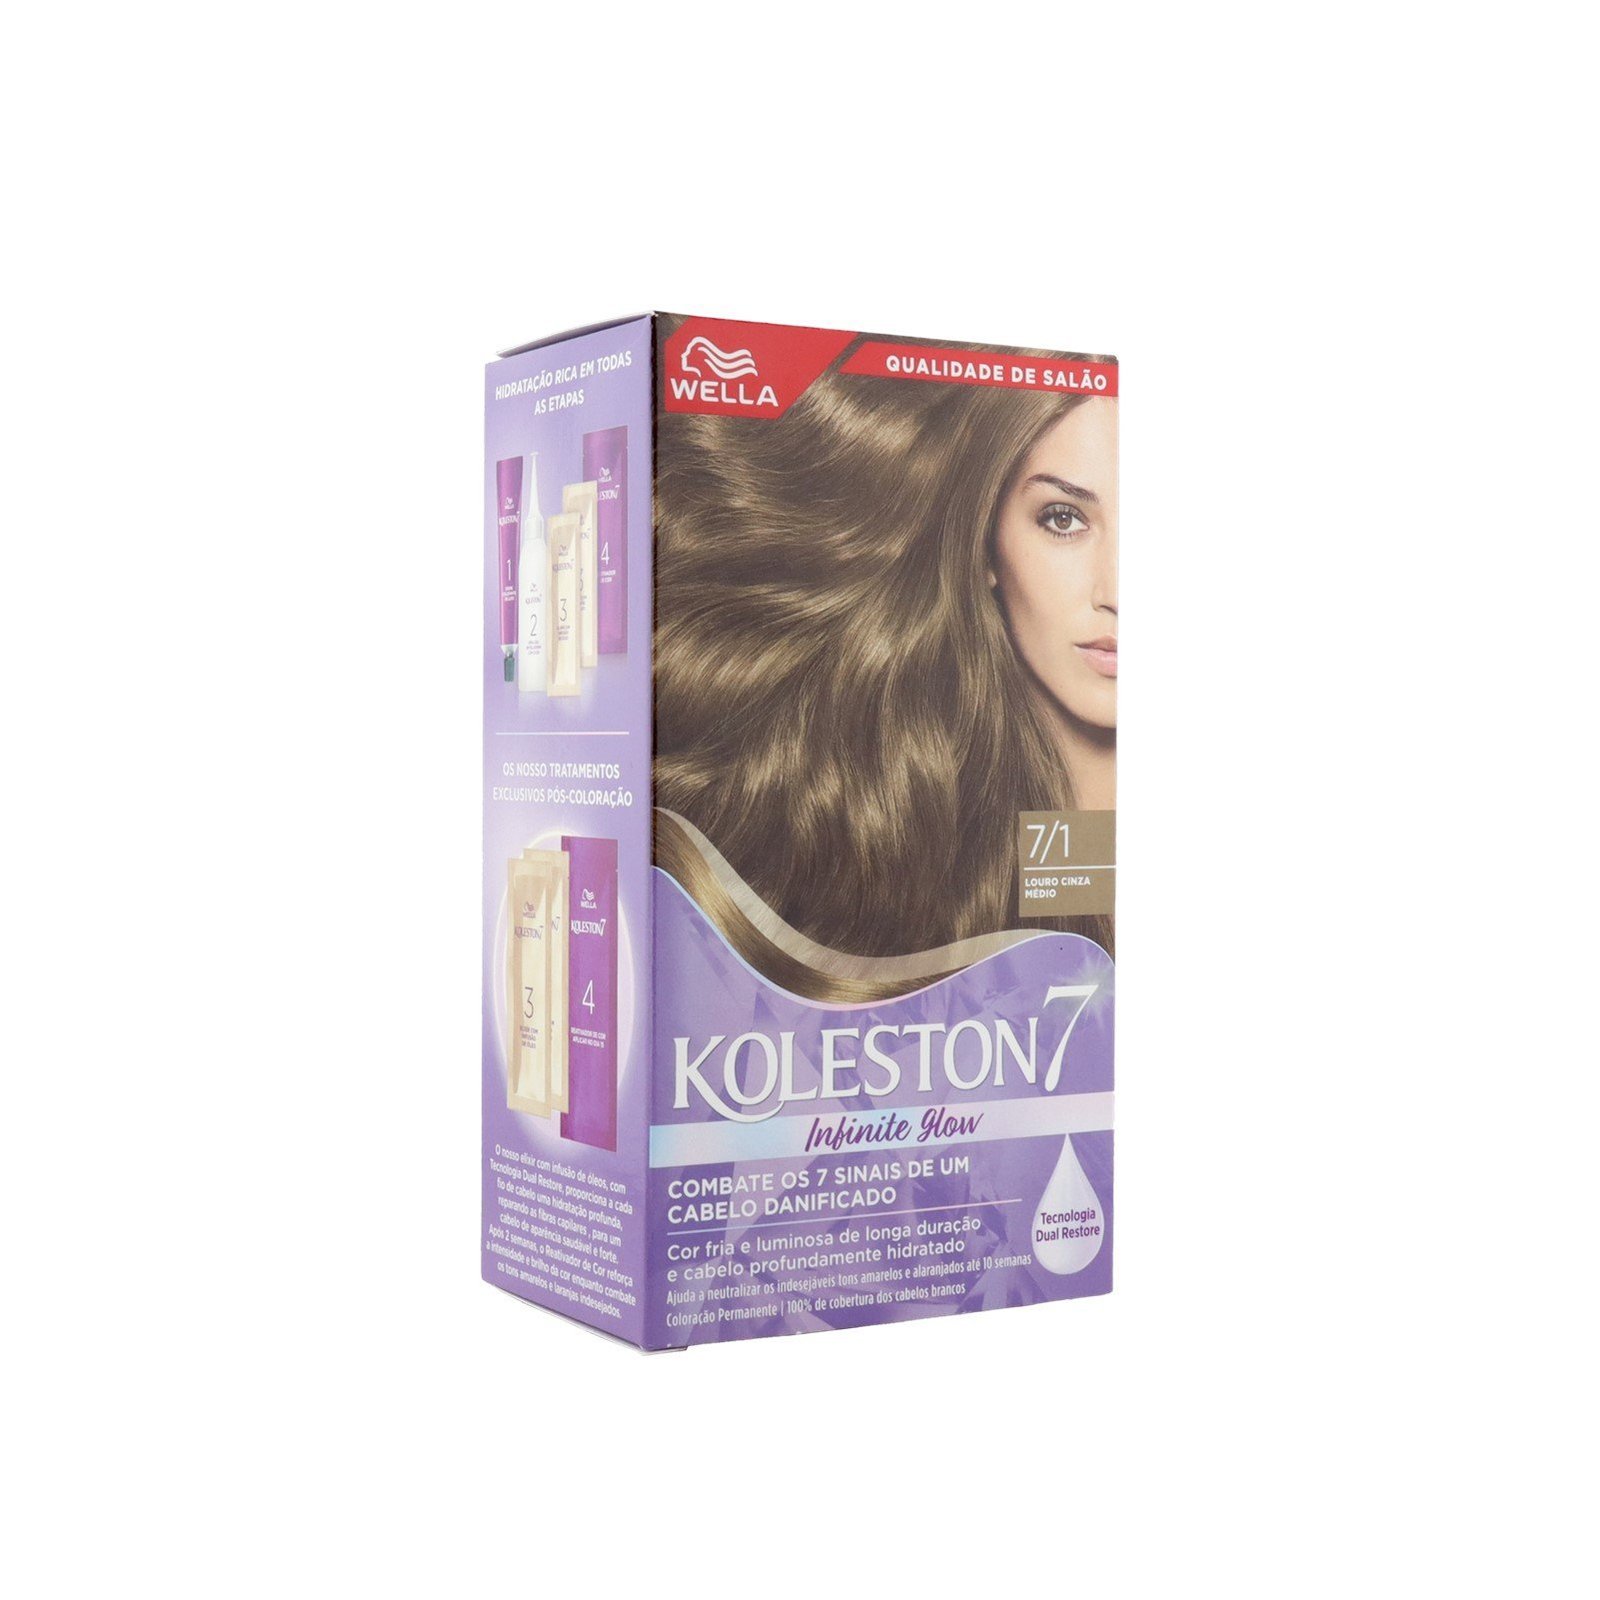 Wella Koleston 7/1 Medium Ash Blonde Permanent Hair Color